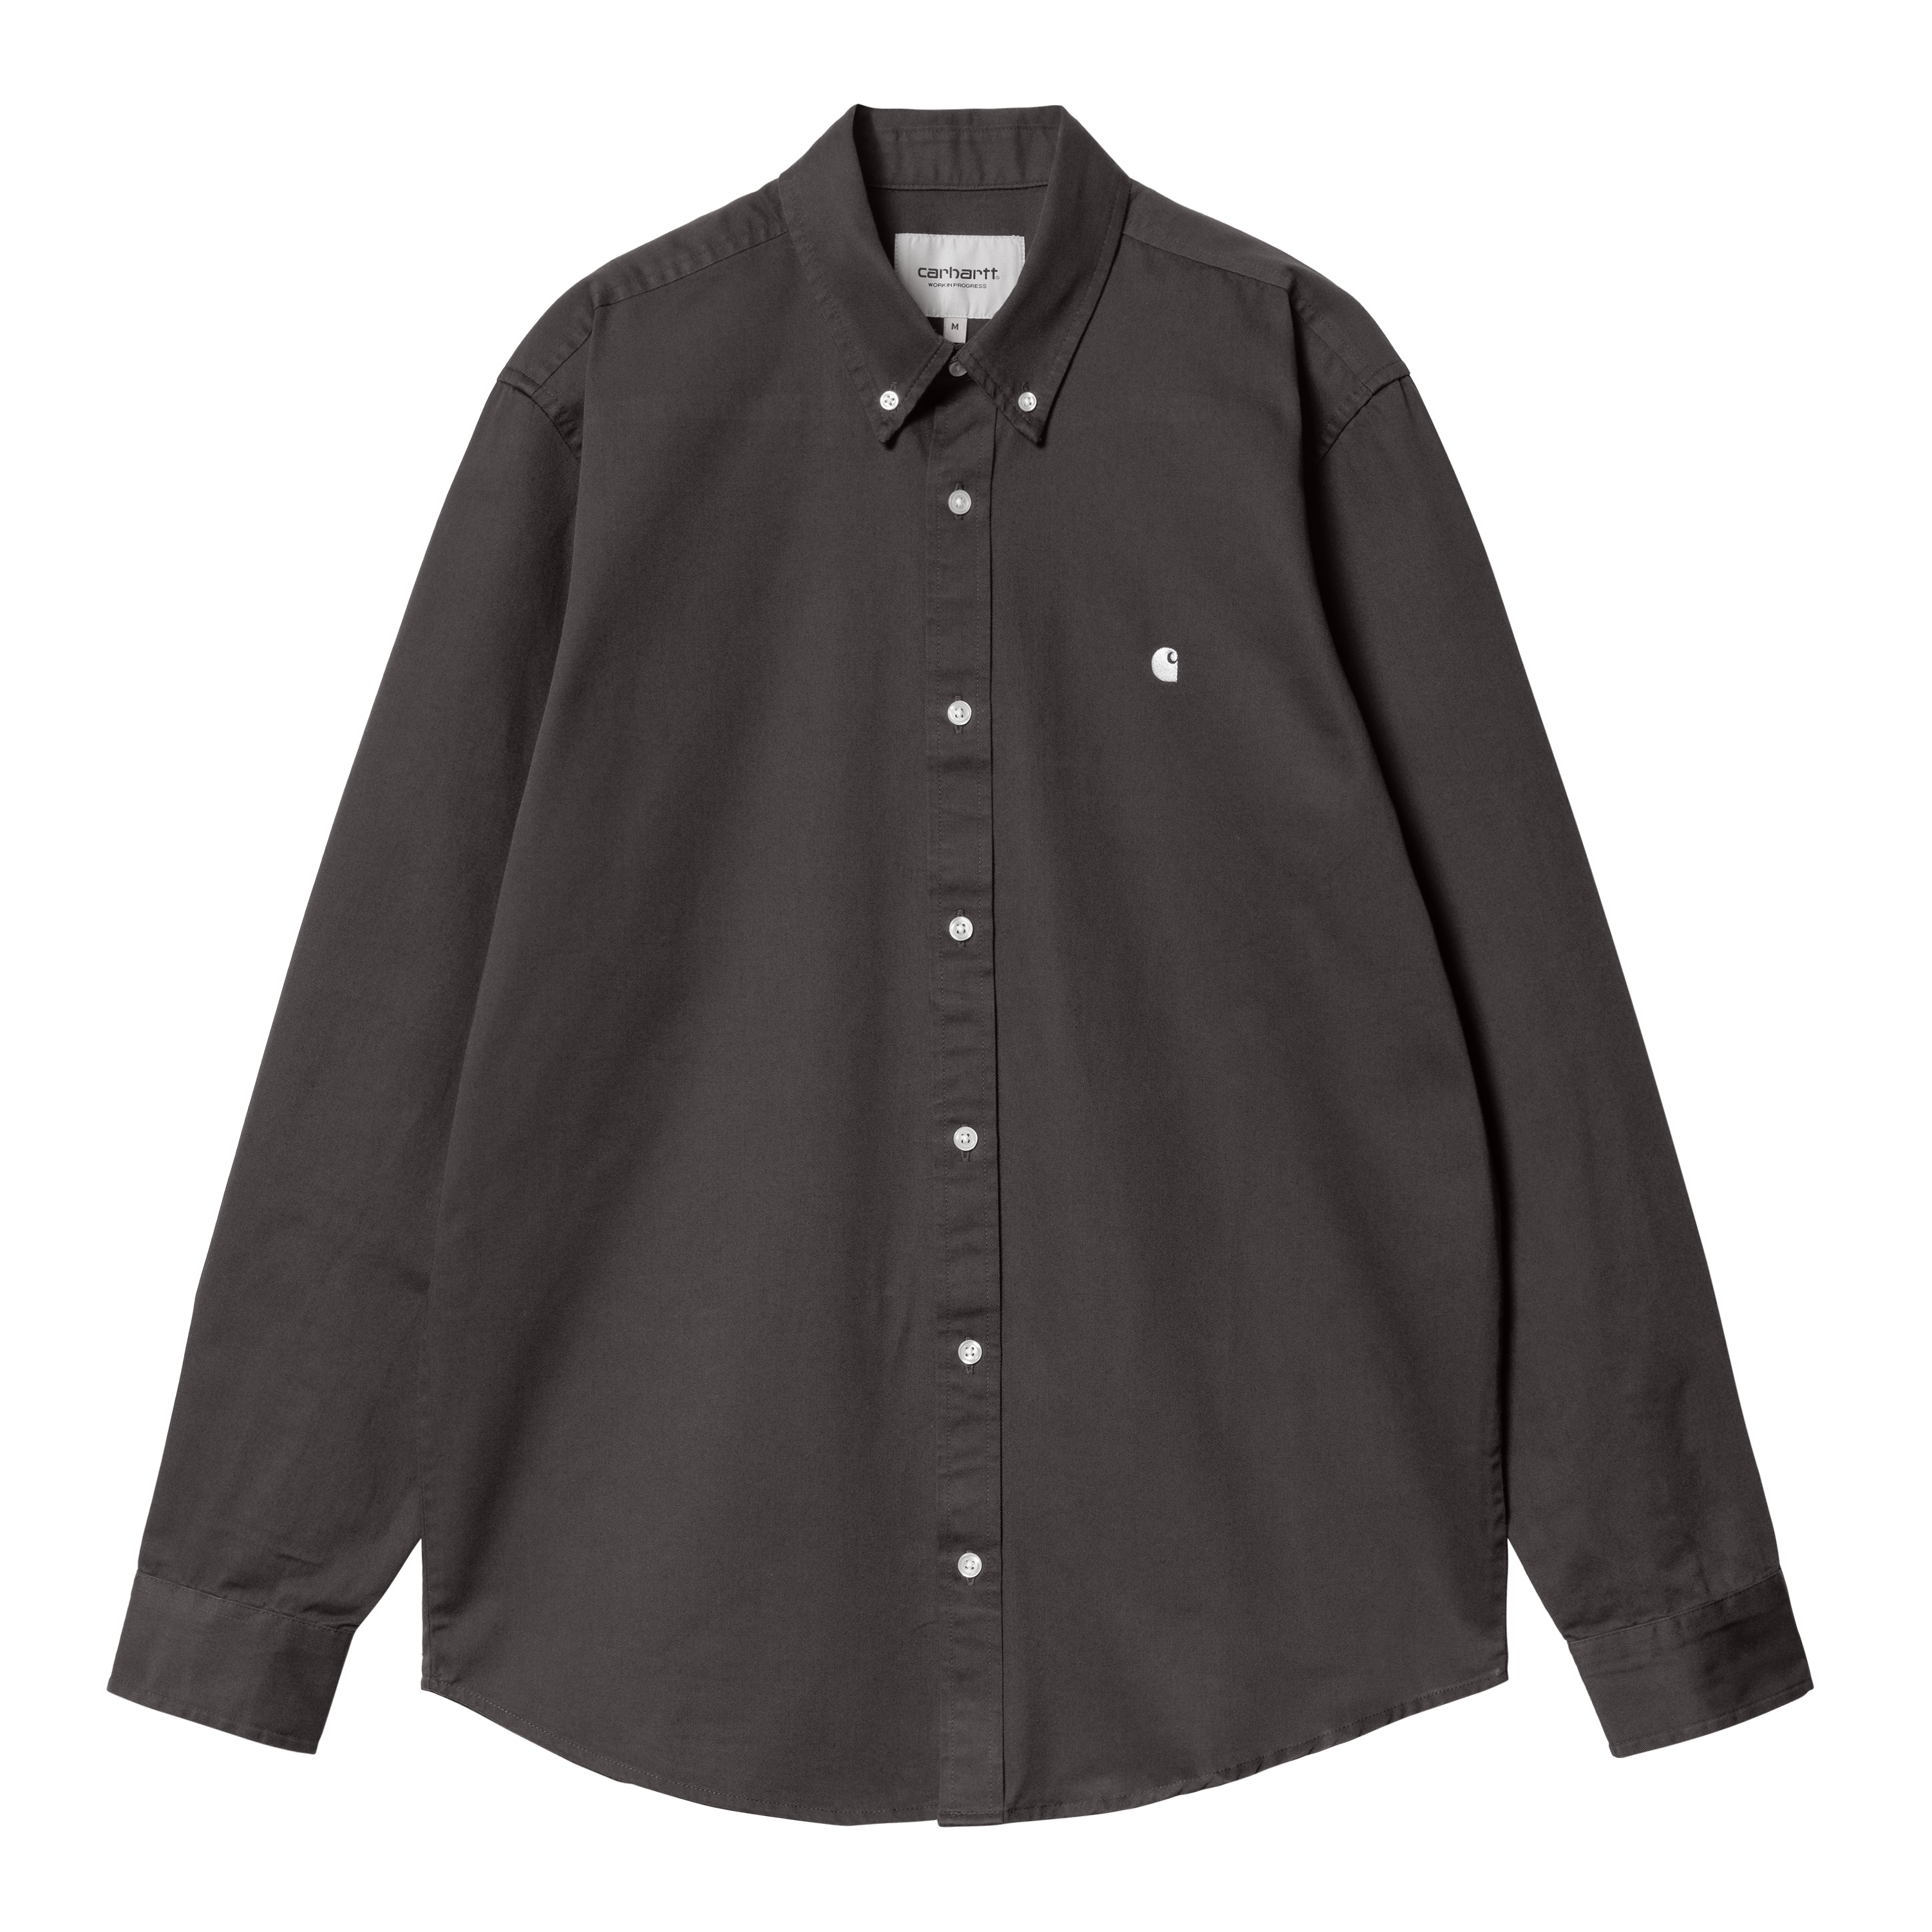 Carhartt WIP Long Sleeve Madison Shirt en Negro